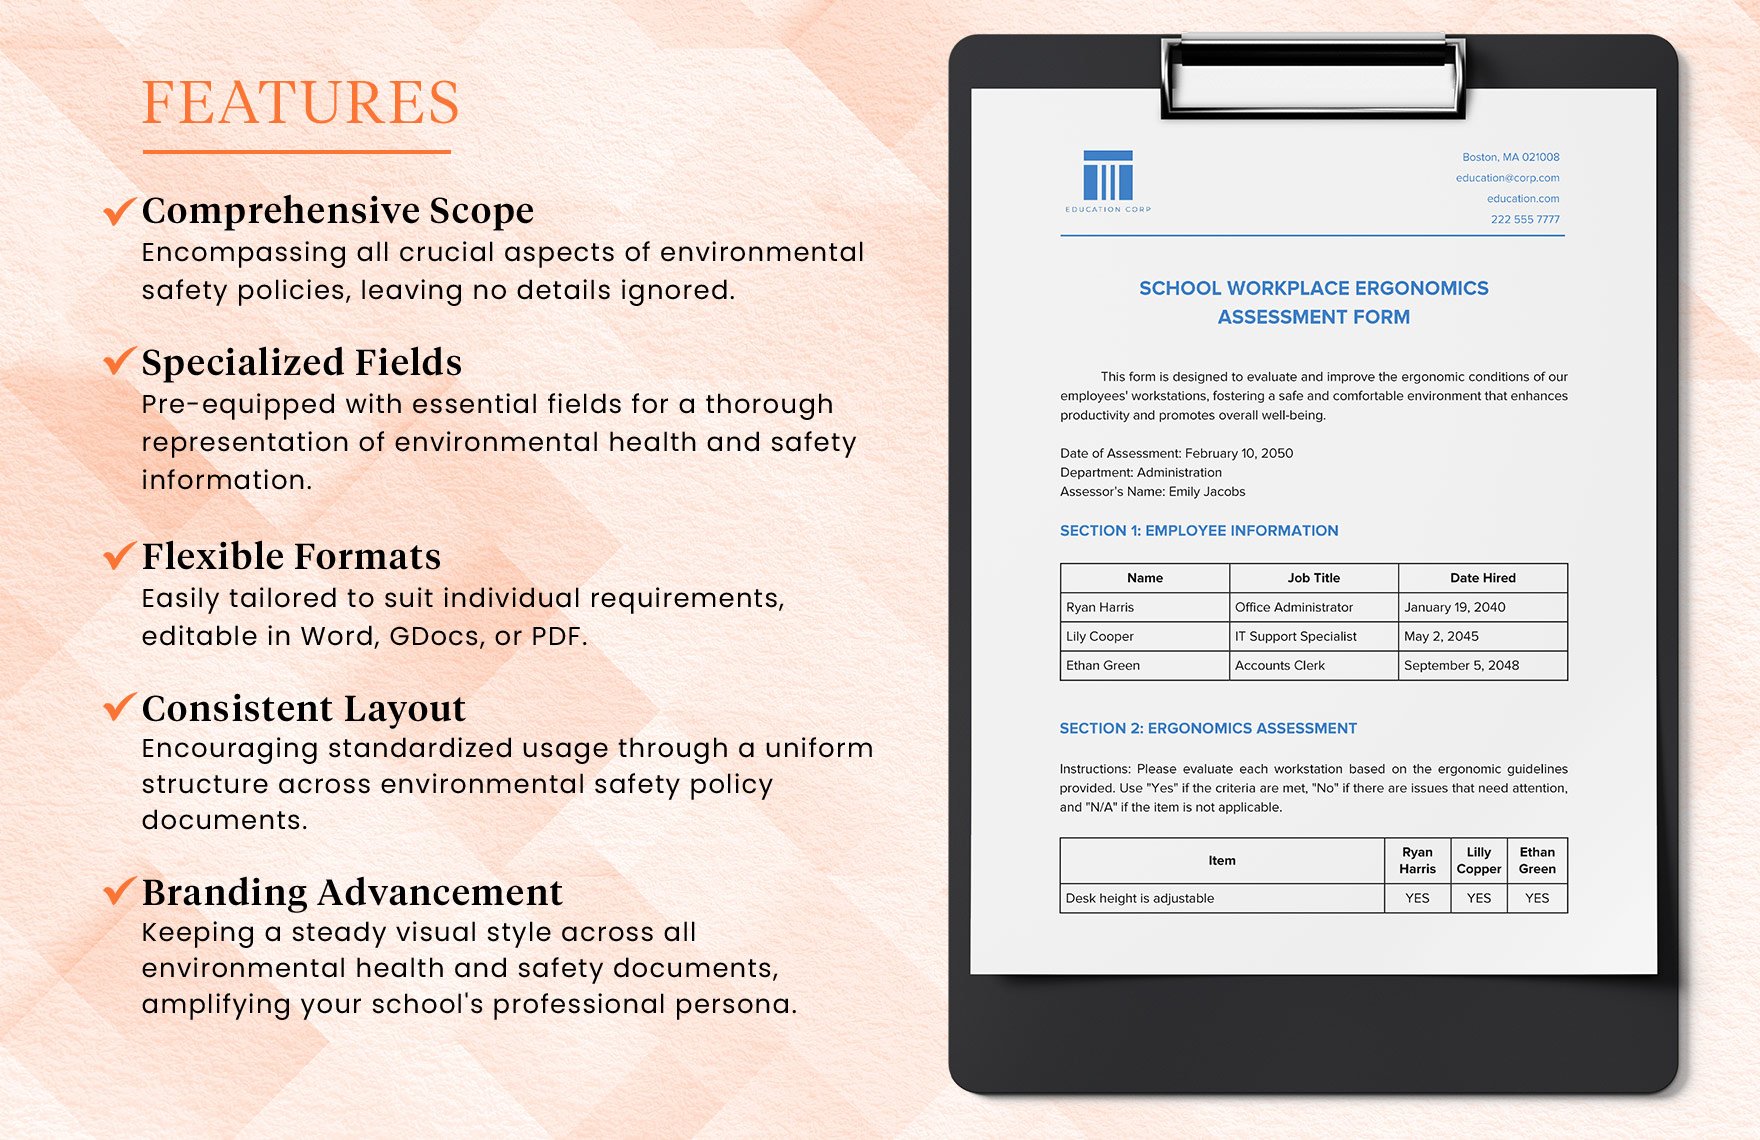 School Workplace Ergonomics Assessment Form Template